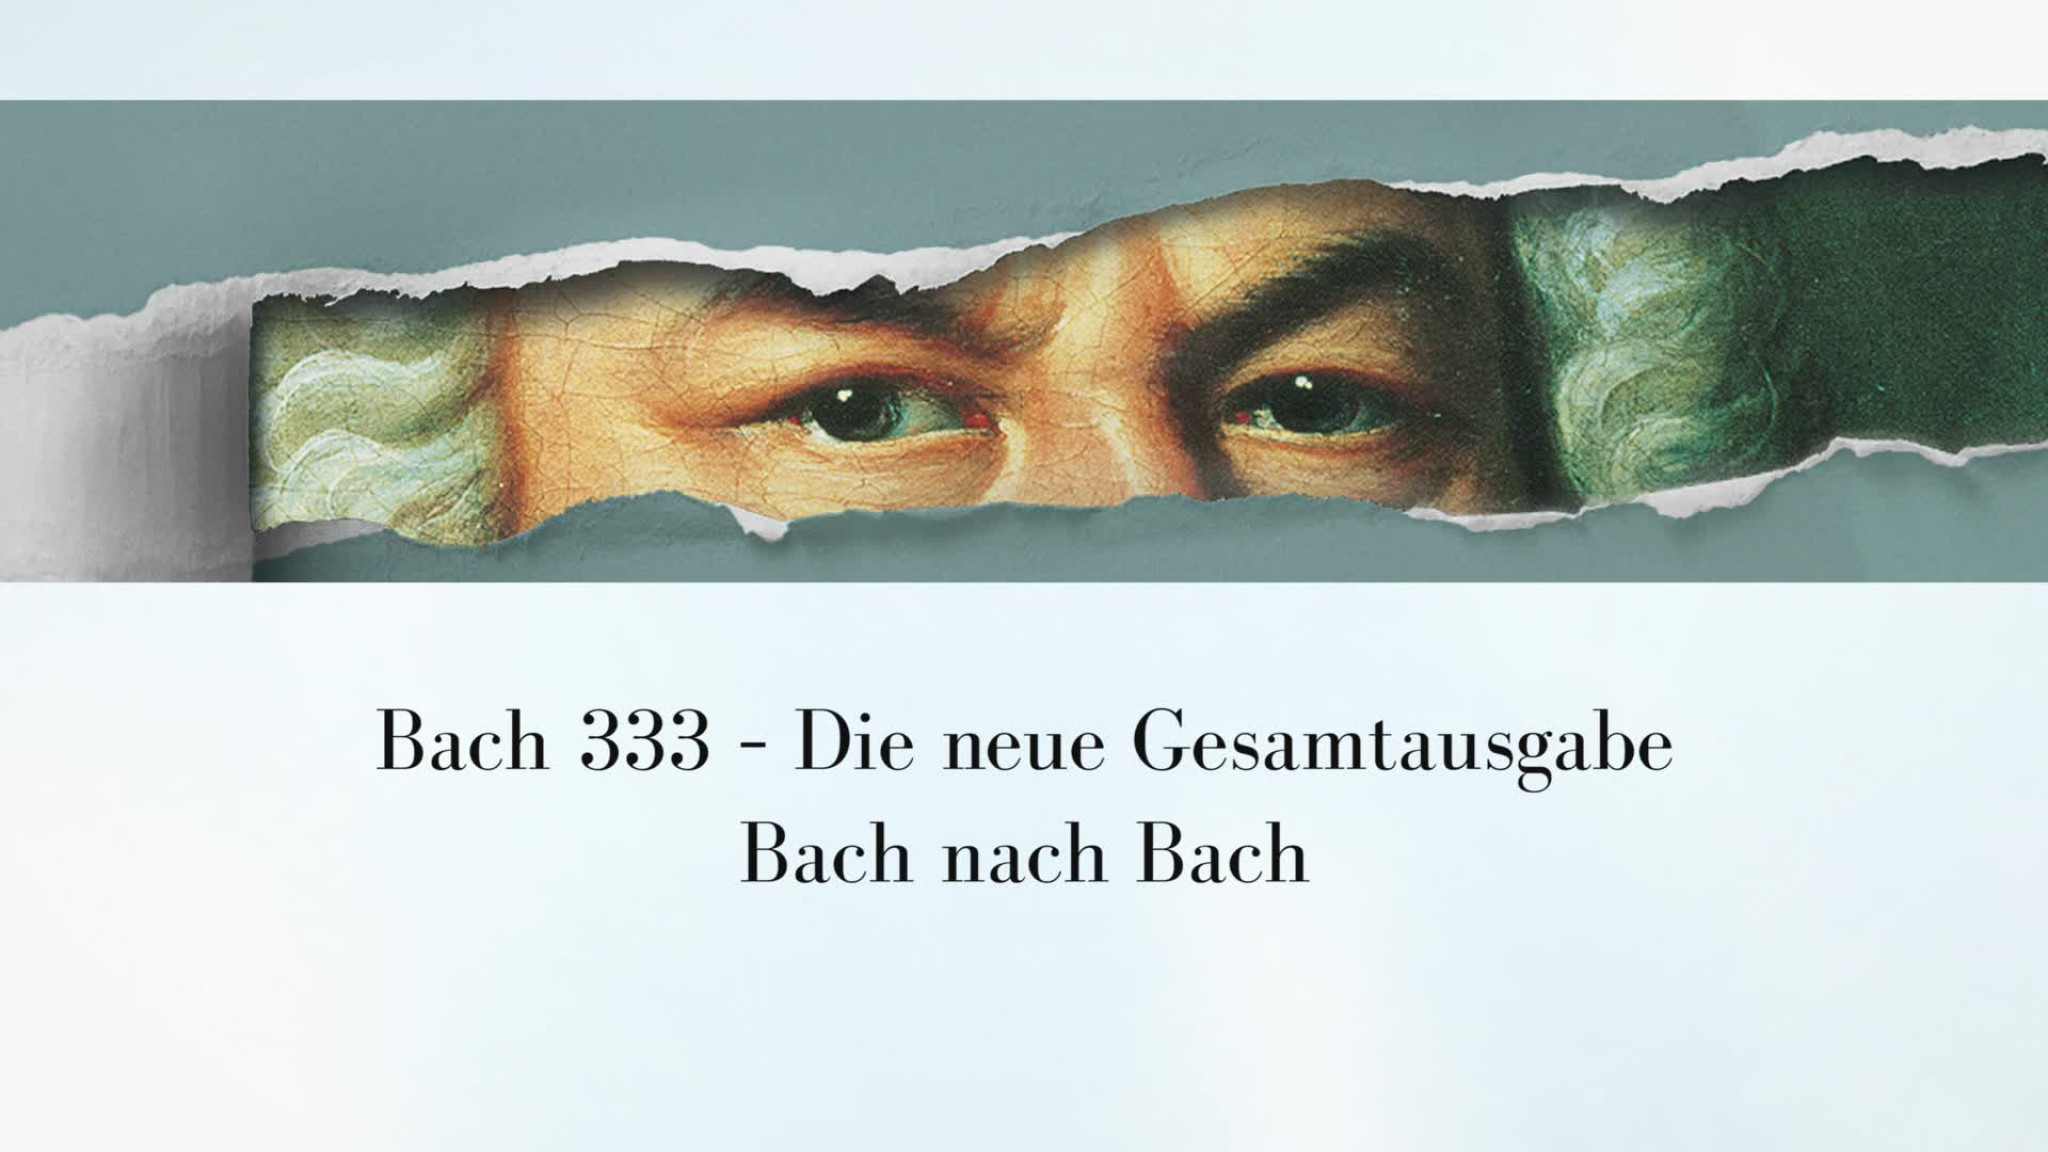 Bach333 - Bach nach Bach